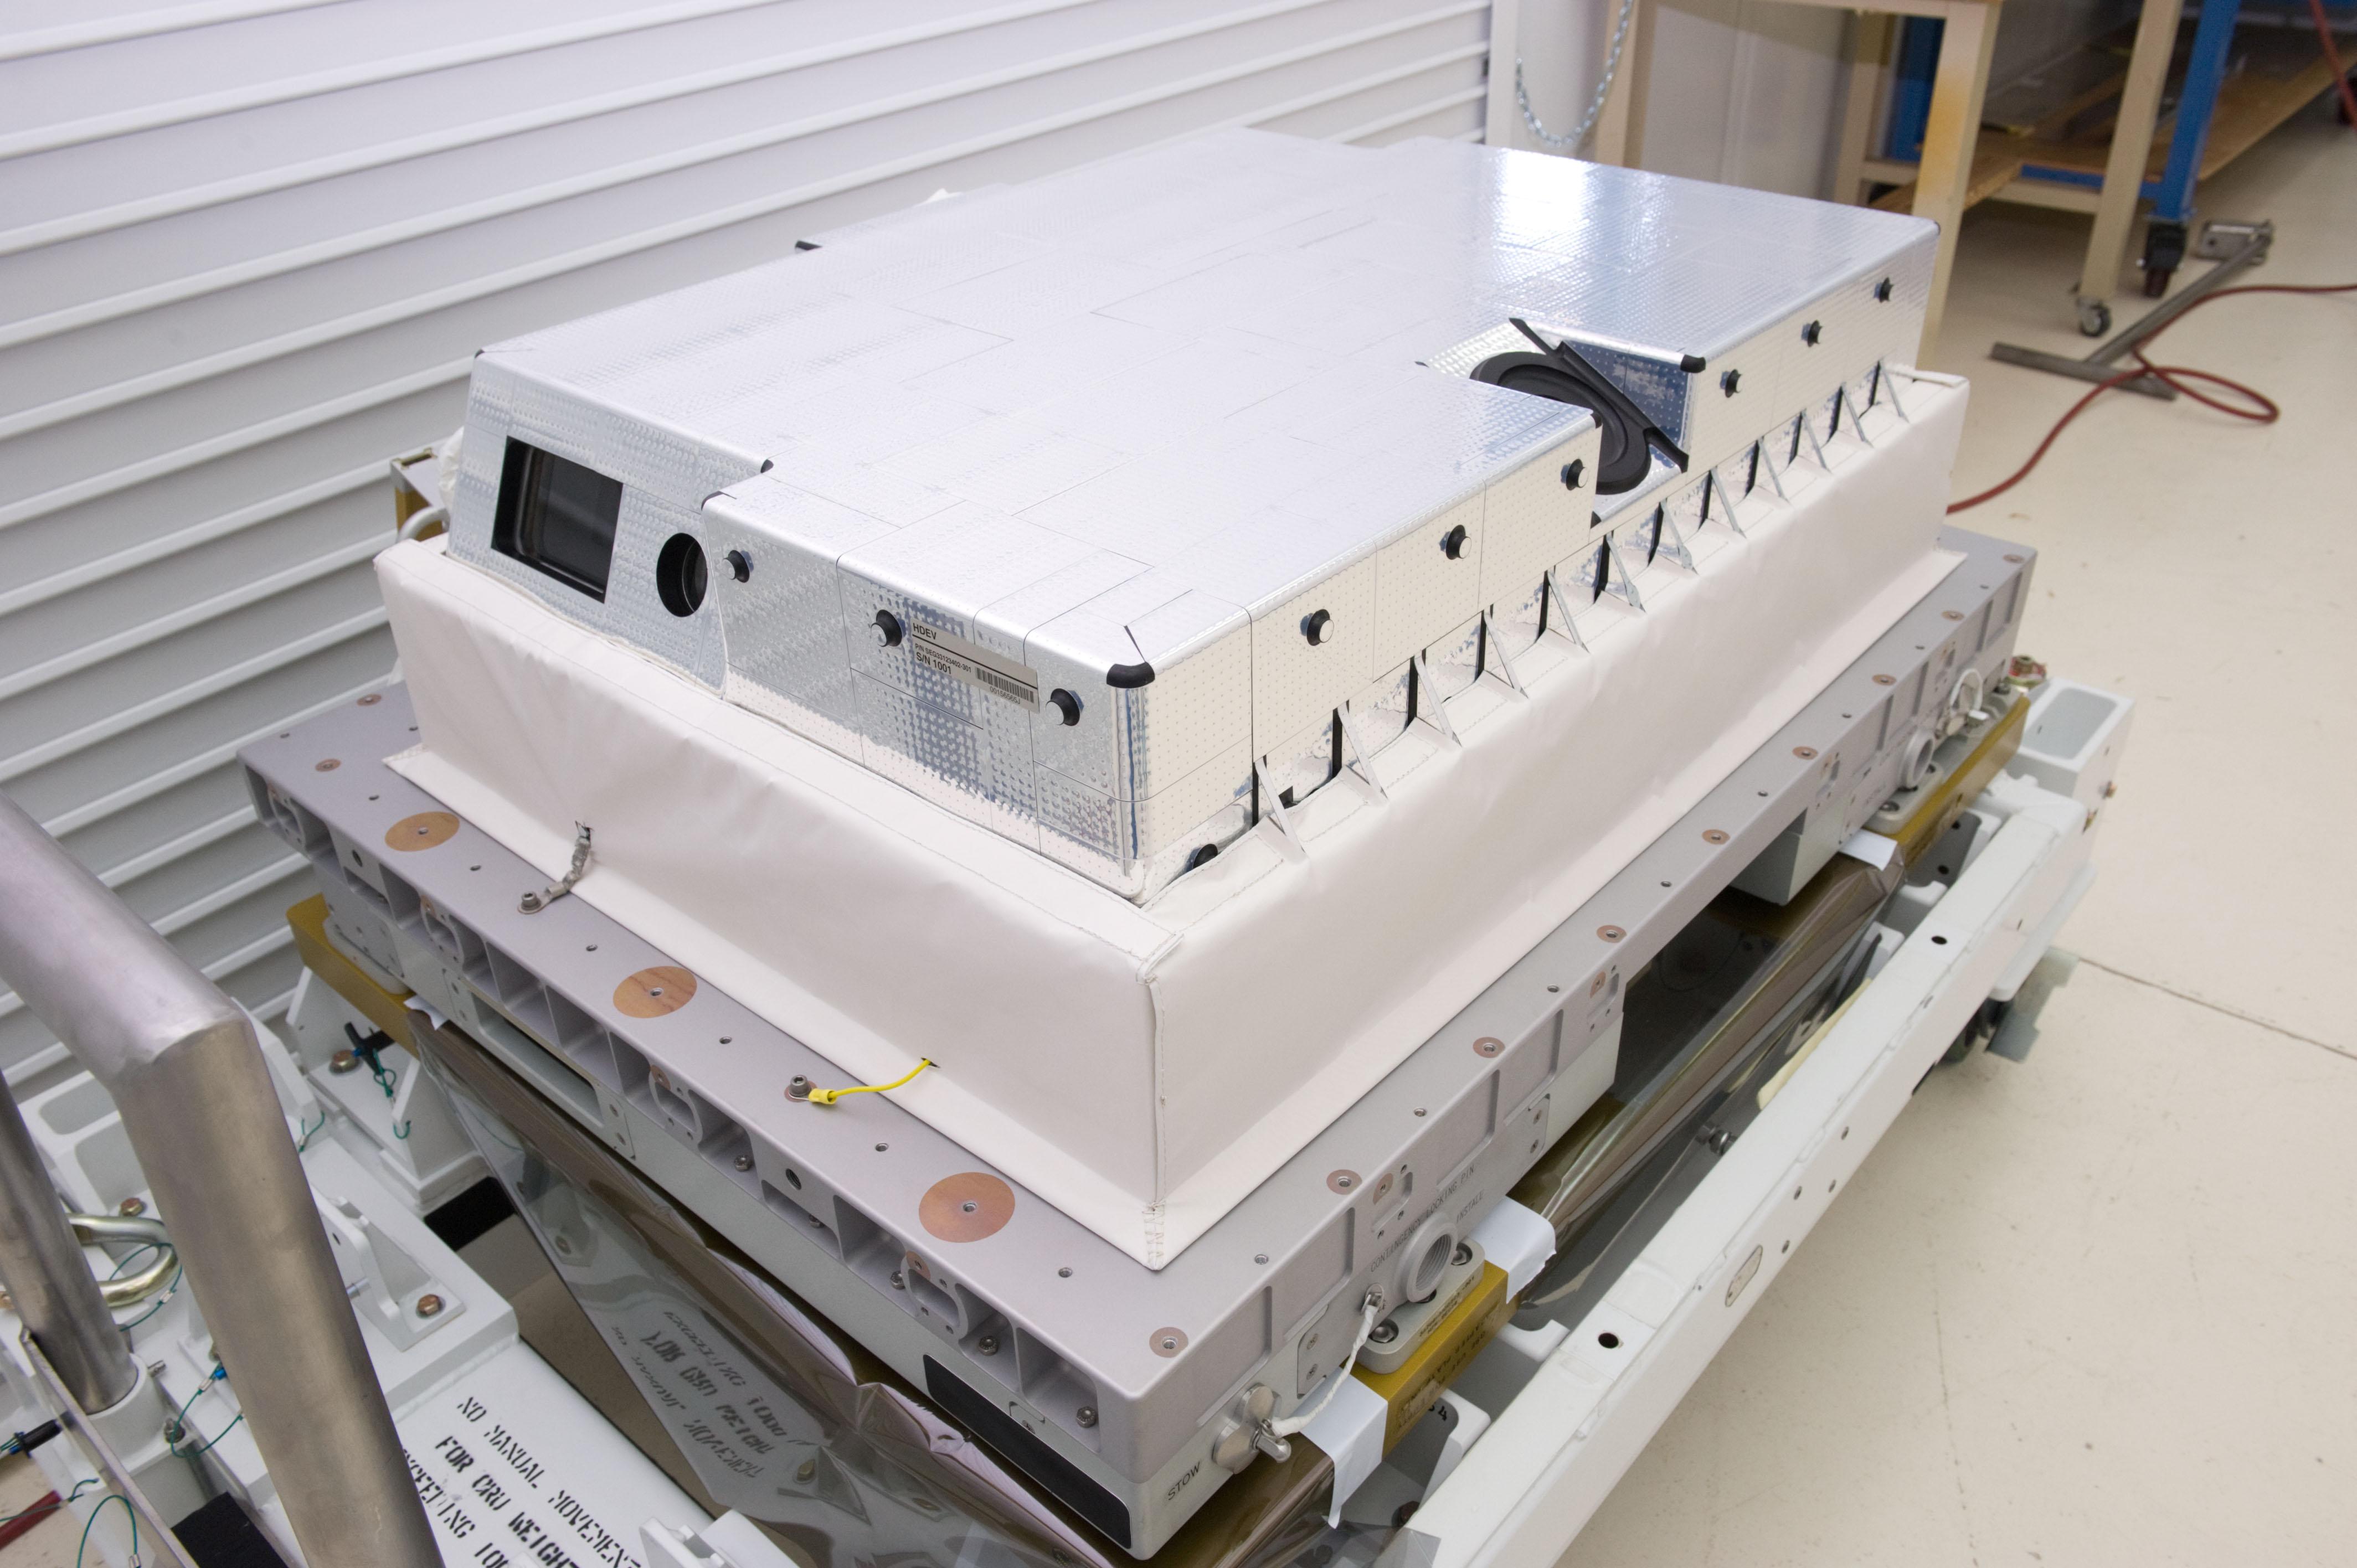 High Definition Earth Viewing System (HDEV) подготовлен к полету на МКС